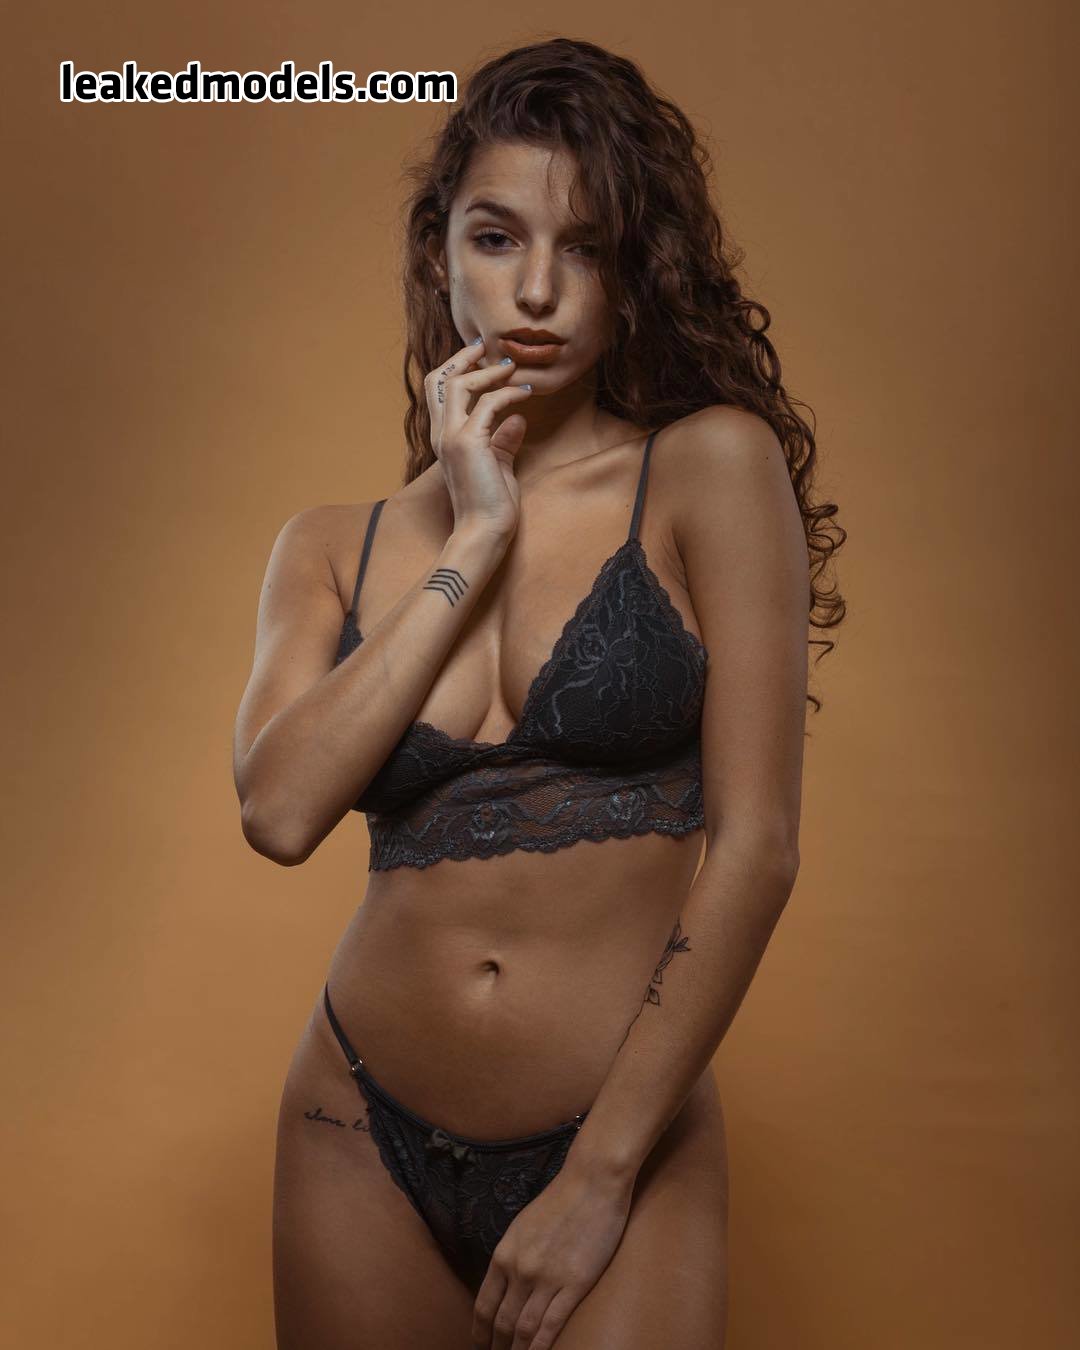 daniela baldi leaked nude leakedmodels.com 0007 - Daniela Baldi Instagram Nude Leaks (42 Photos)